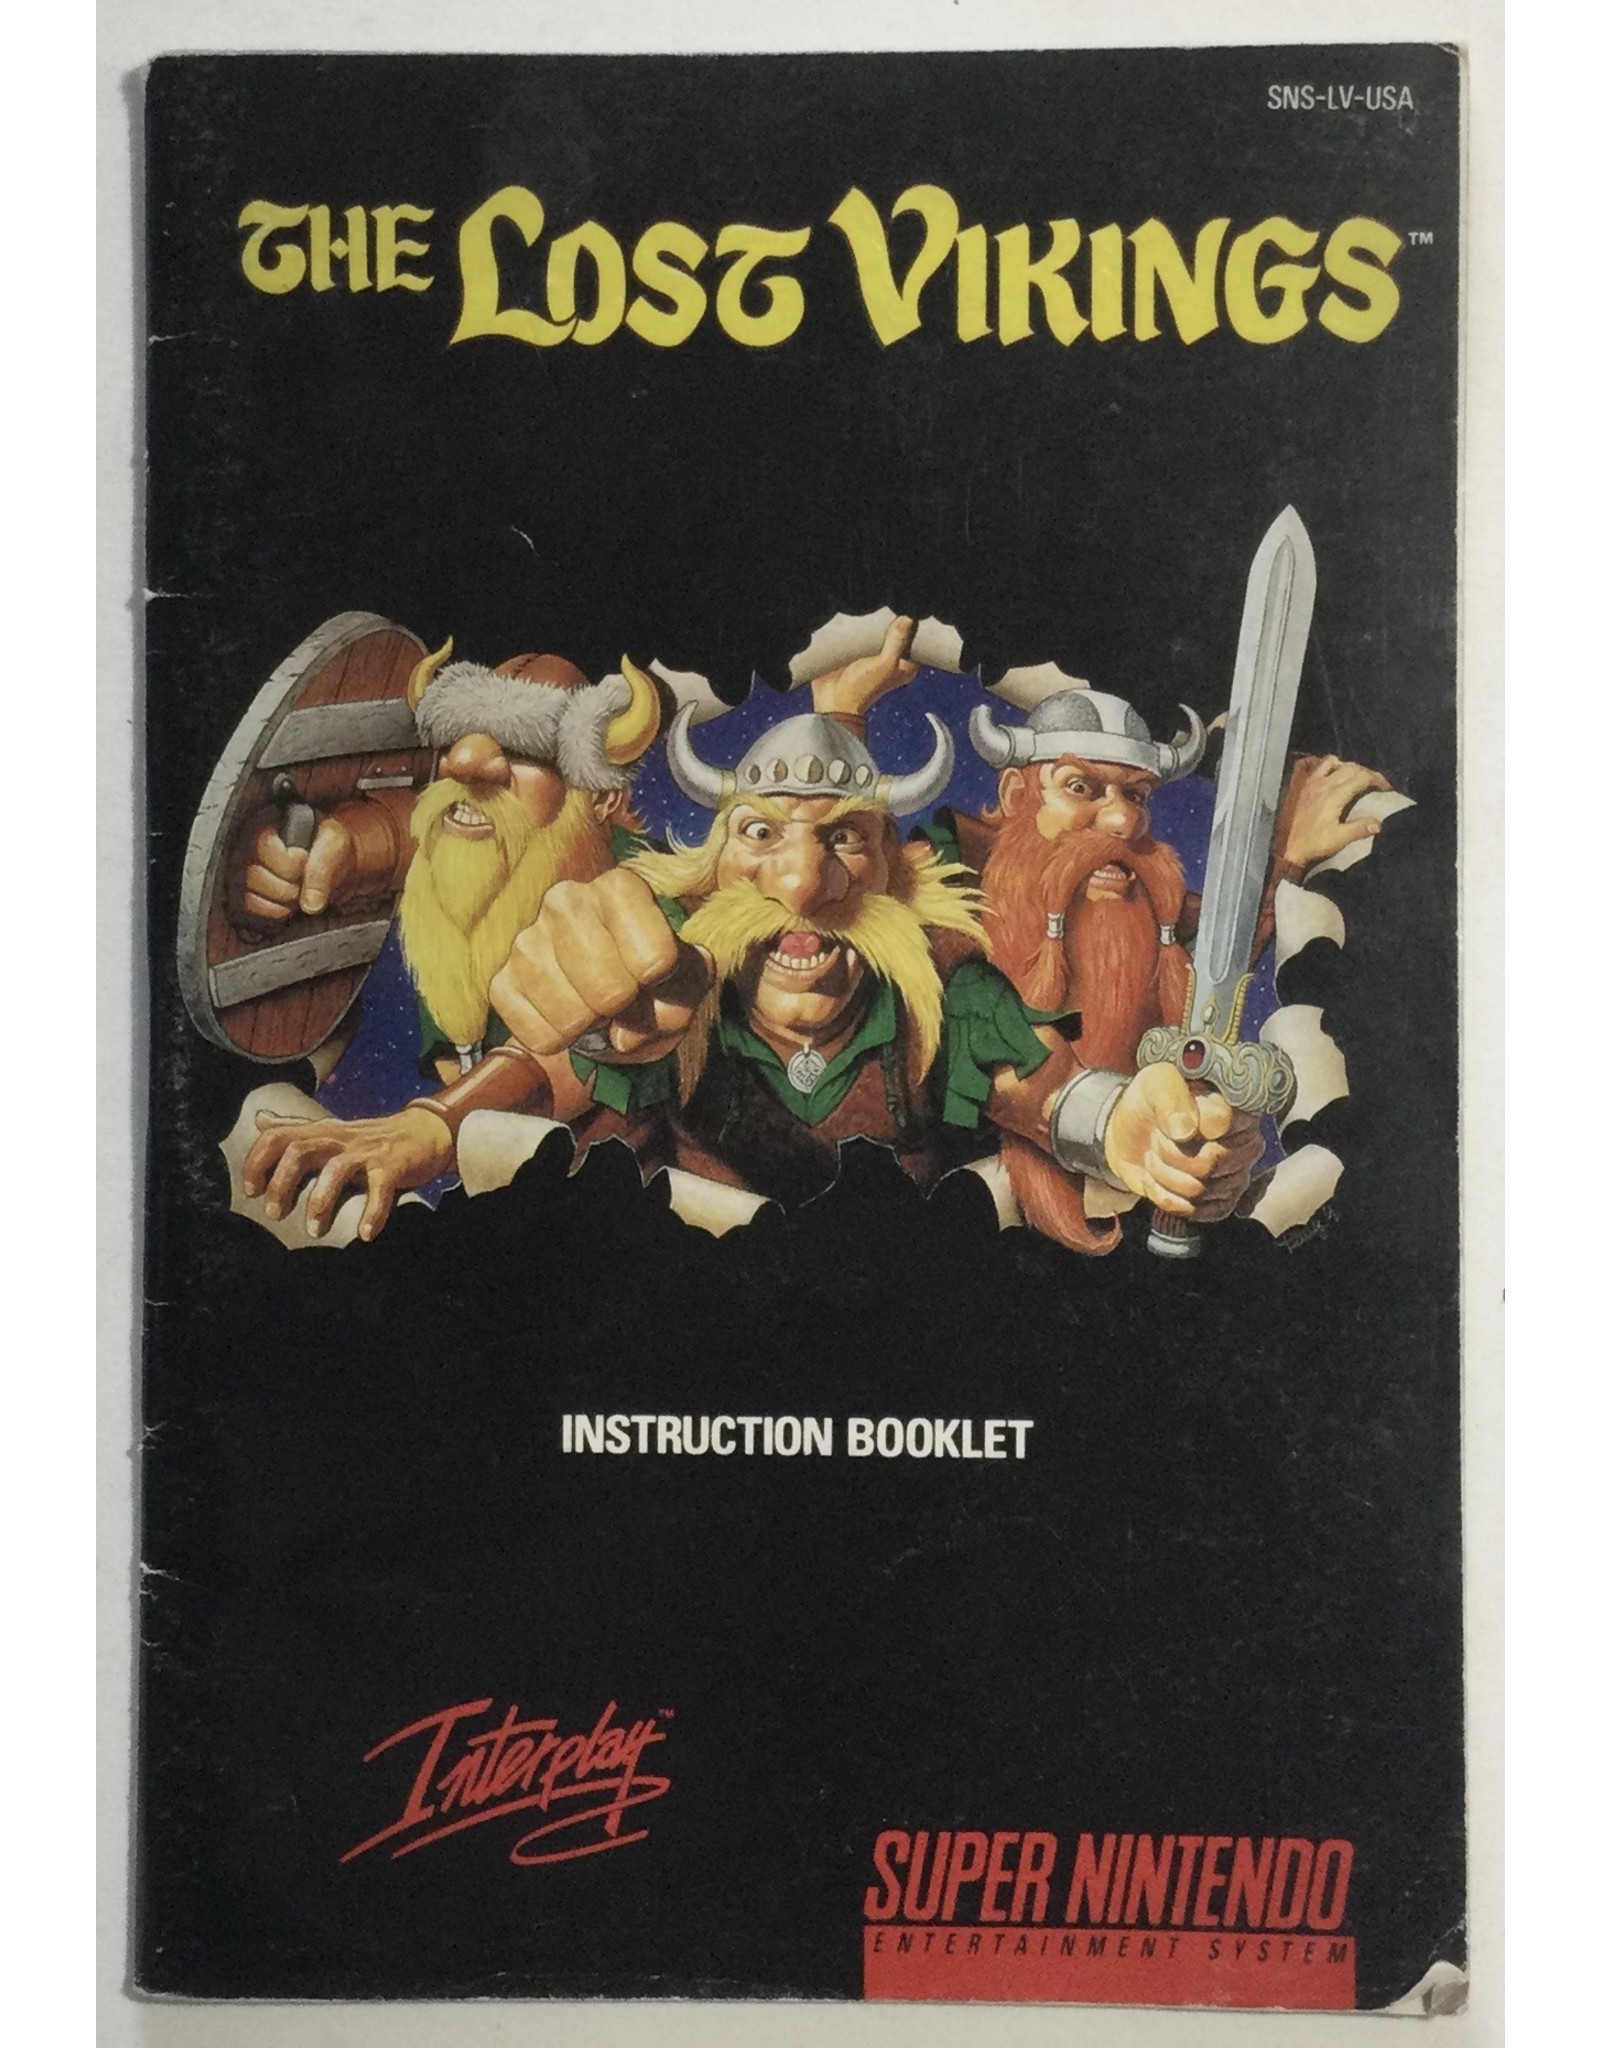 INTERPLAY The Lost Vikings for Super Nintendo Entertainment System (SNES) - CIB